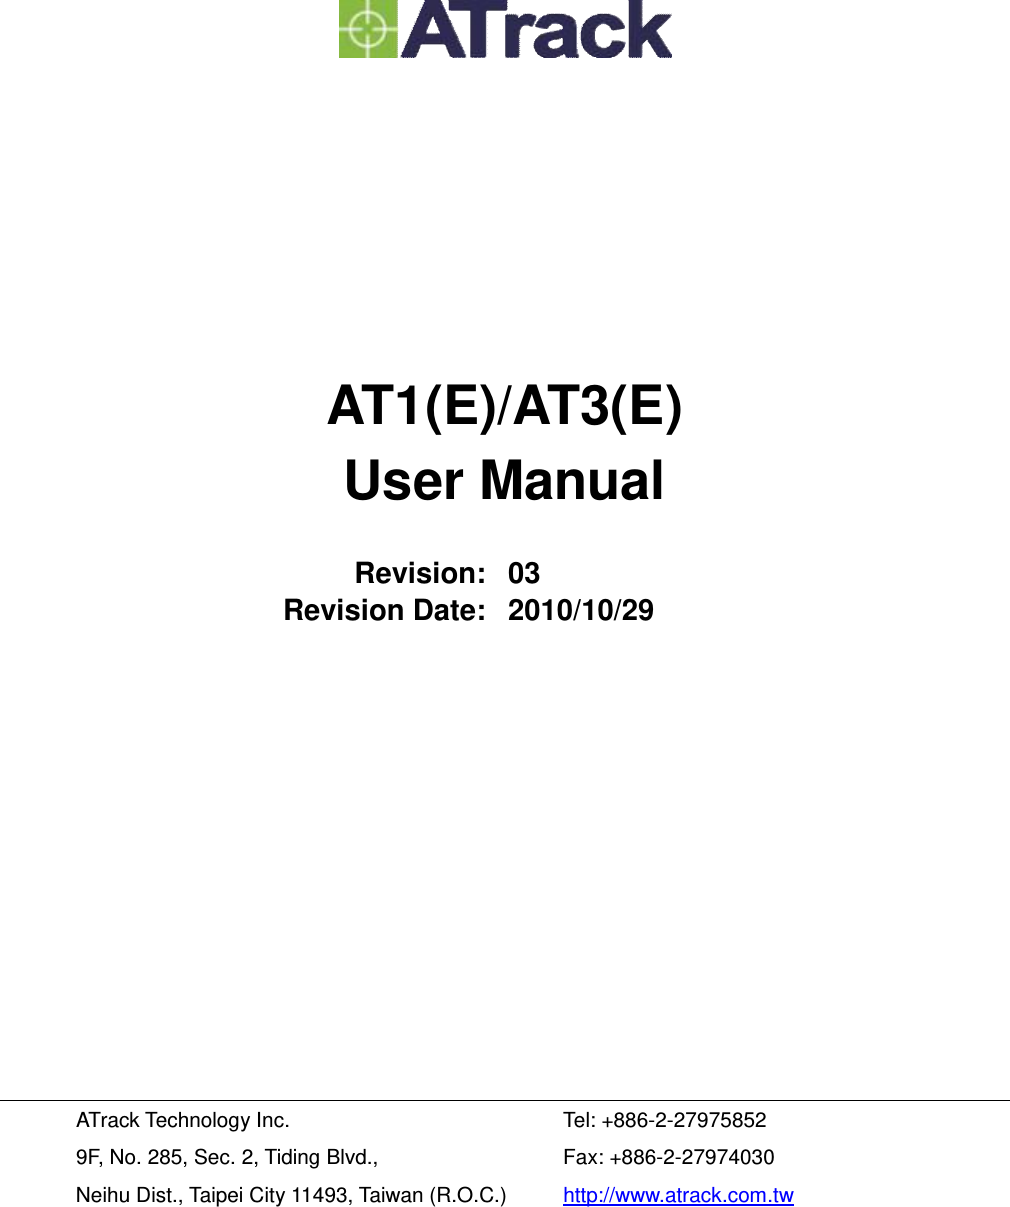         AT1(E)/AT3(E) User Manual  Revision: 03 Revision Date: 2010/10/29            ATrack Technology Inc. 9F, No. 285, Sec. 2, Tiding Blvd., Neihu Dist., Taipei City 11493, Taiwan (R.O.C.) Tel: +886-2-27975852 Fax: +886-2-27974030 http://www.atrack.com.tw 